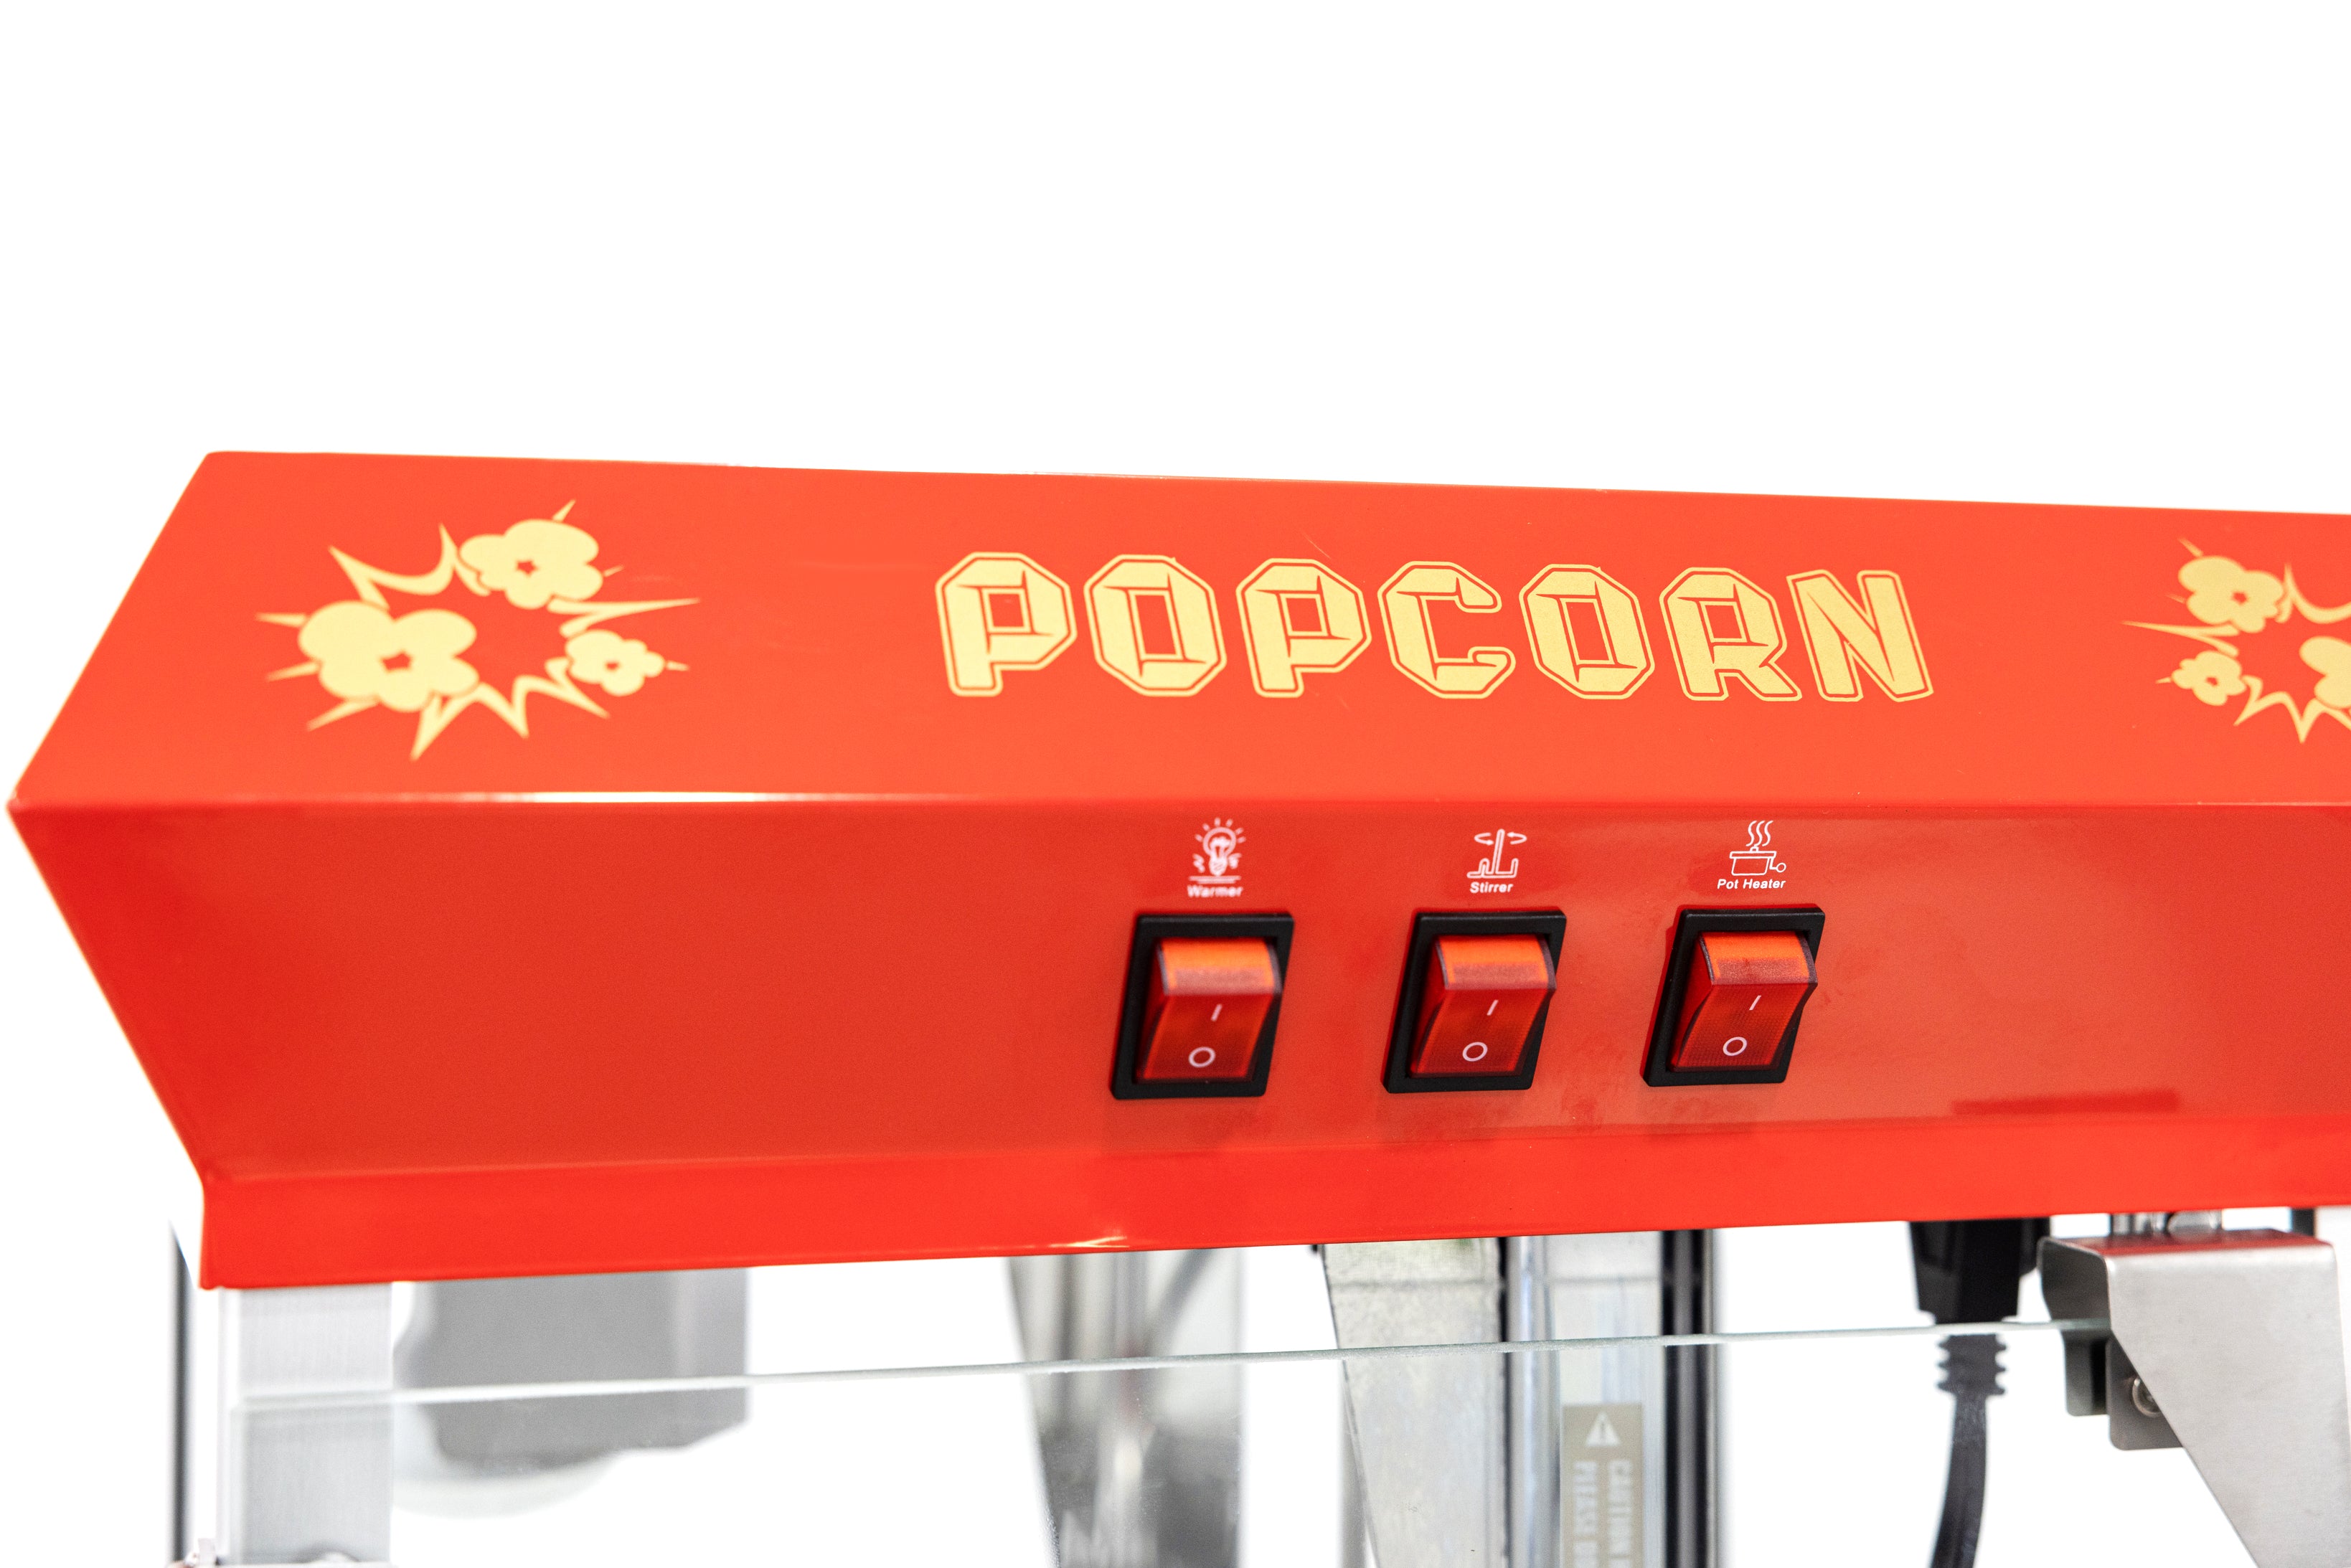 8oz Popcorn Machine with Matching Cart